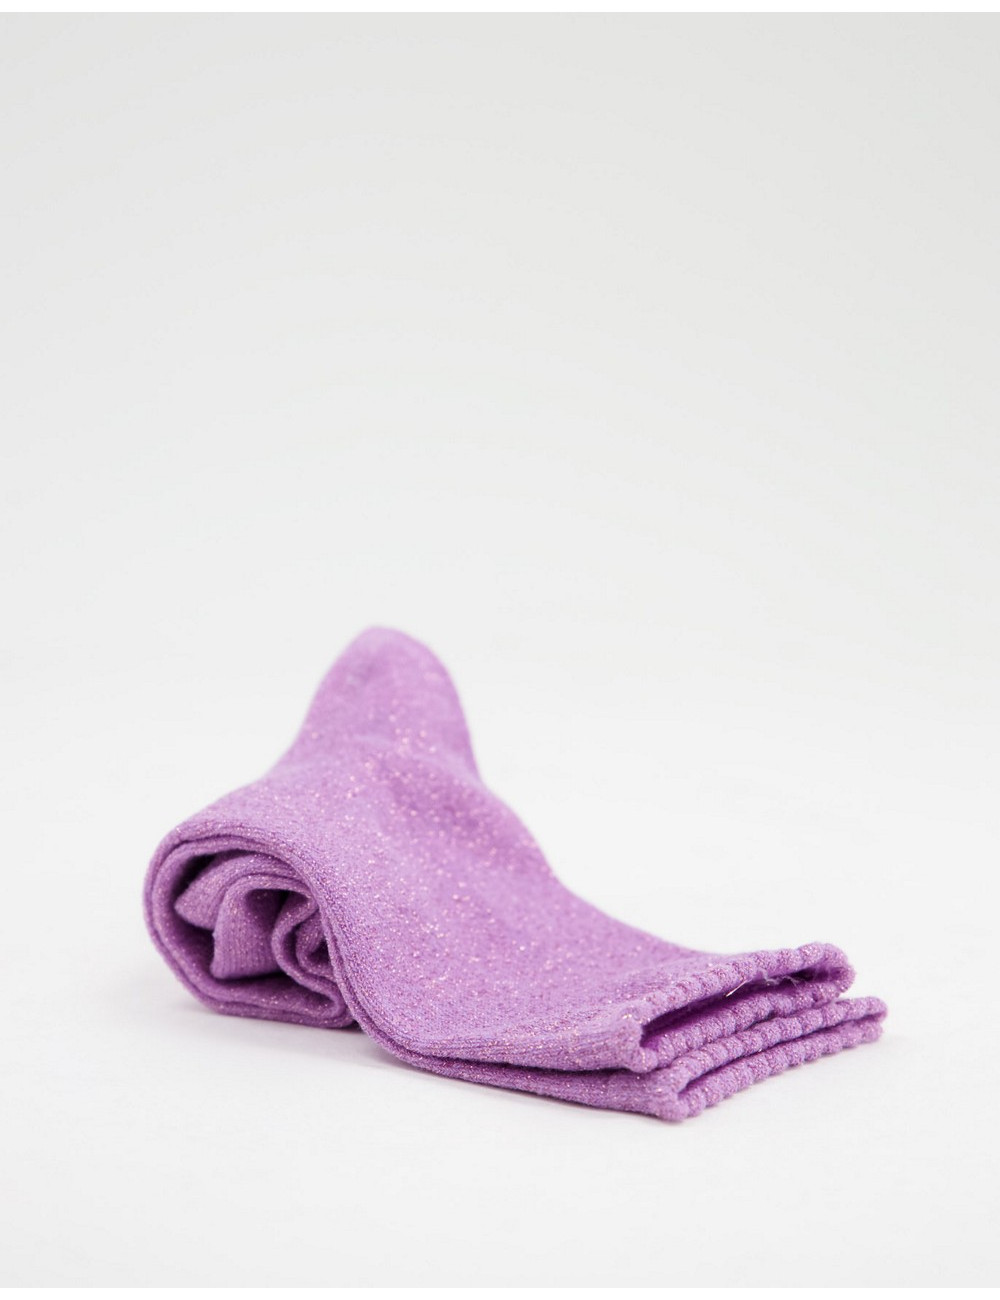 Pieces glitter sock in purple